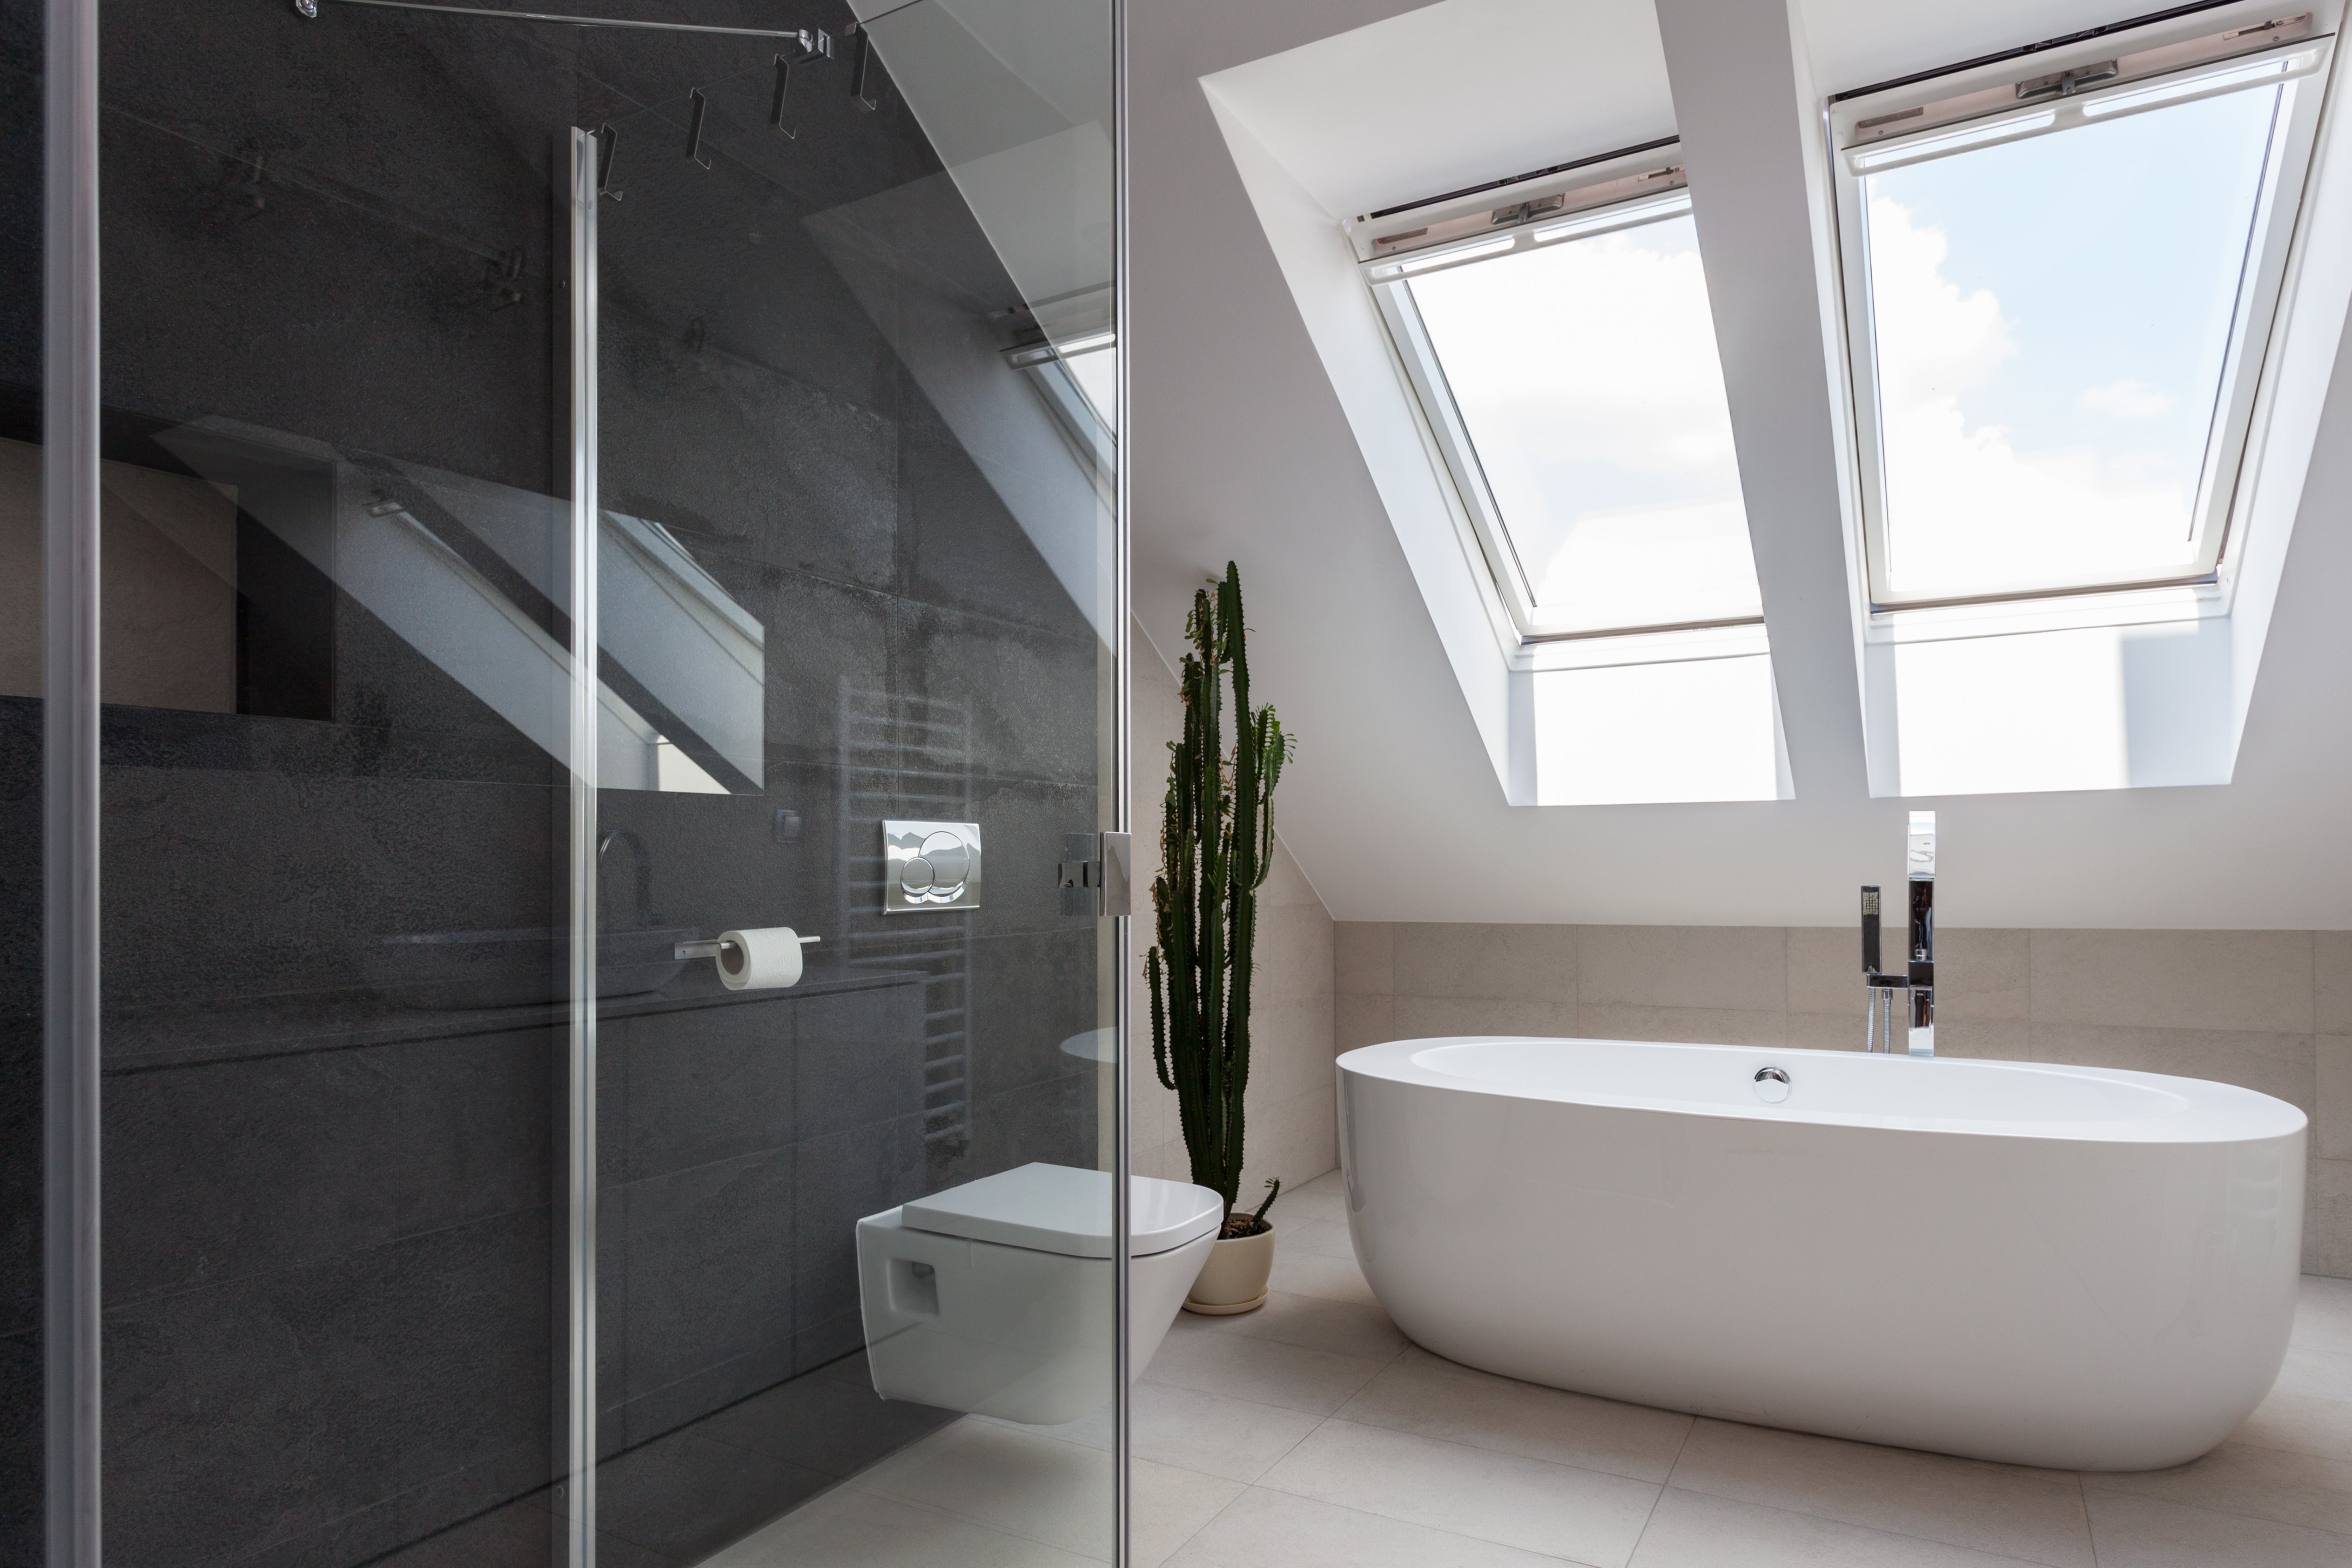 Second Storey Bathroom Skylights by Velux